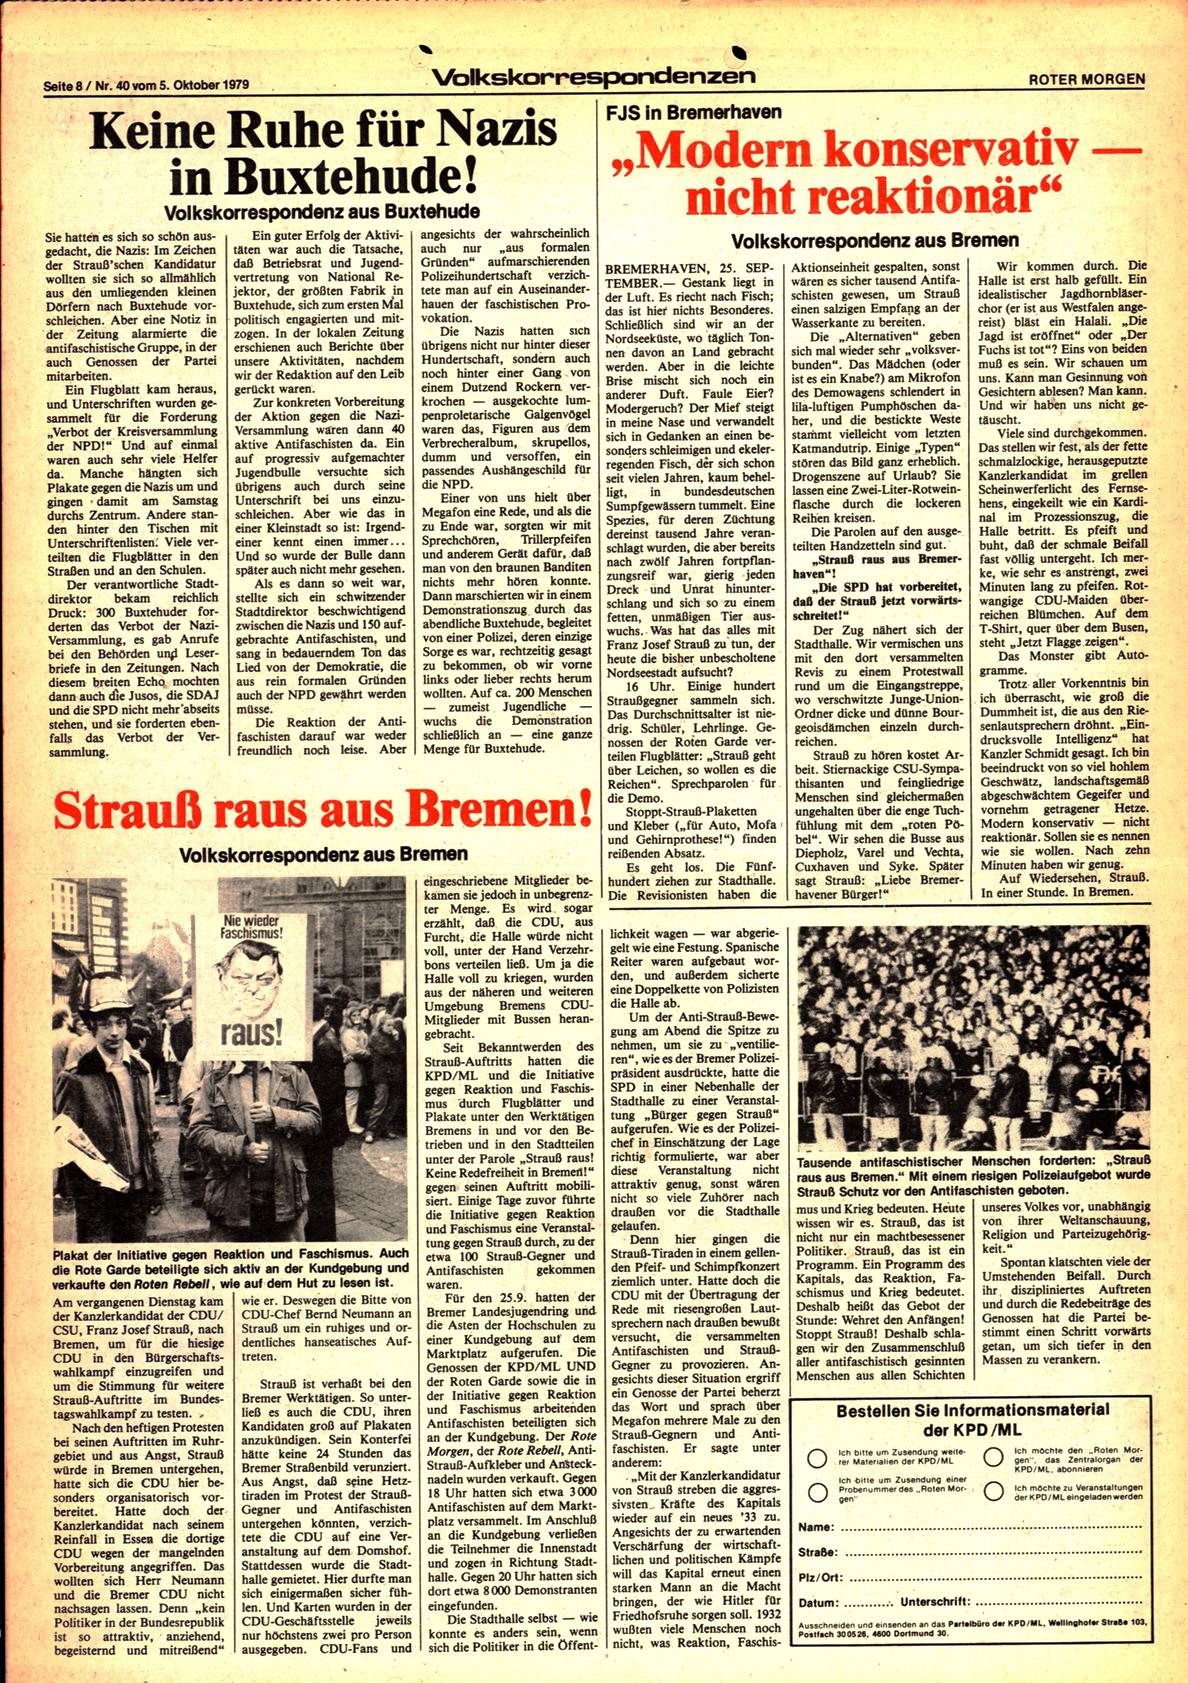 Roter Morgen, 13. Jg., 5. Oktober 1979, Nr. 40, Seite 8